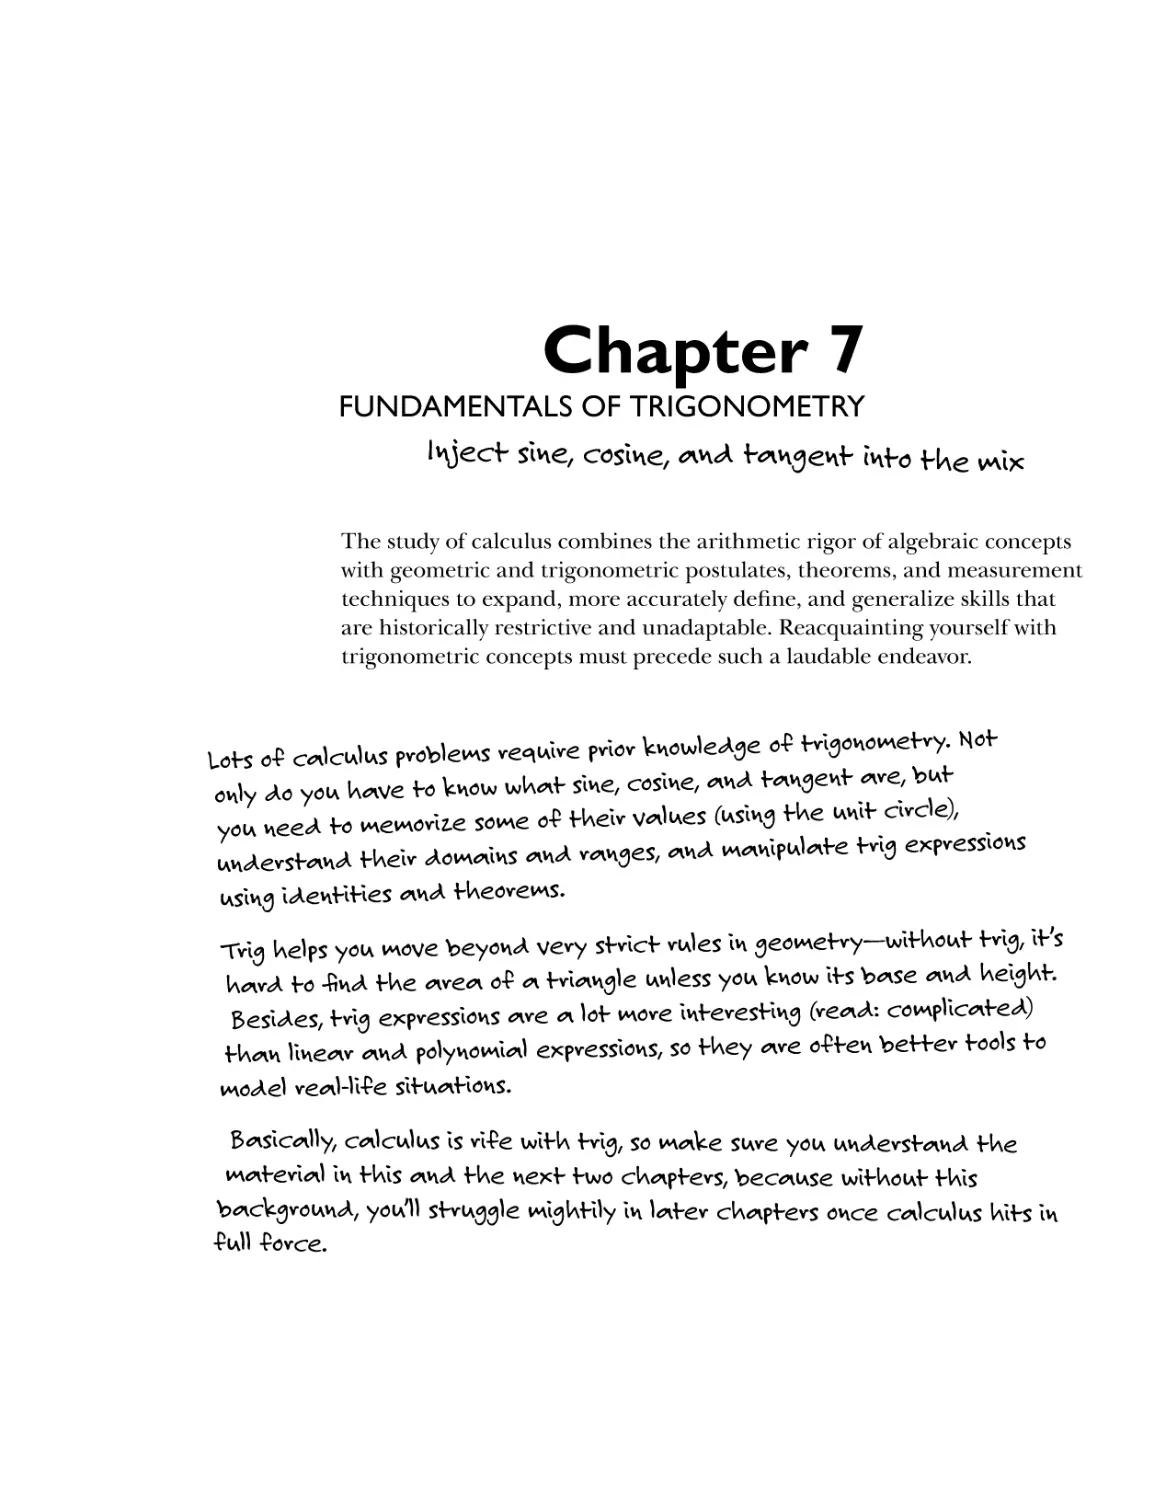 Chapter 7: Fundamentals of Trigonometry 91